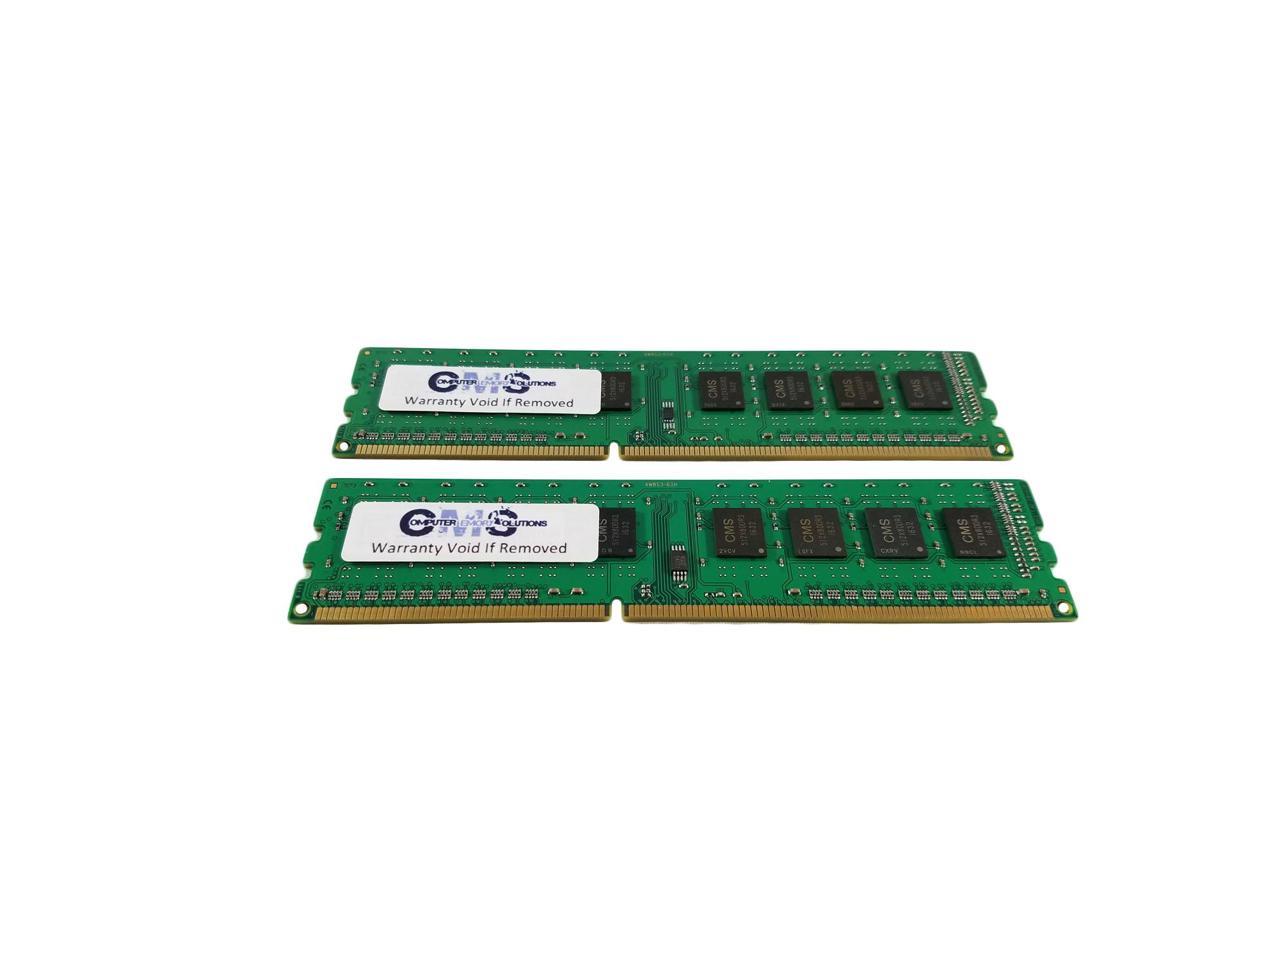 PC3-10600 RAM Memory Upgrade for the Dell Optiplex 700 Series 790 Mini Tower 2GB DDR3-1333 